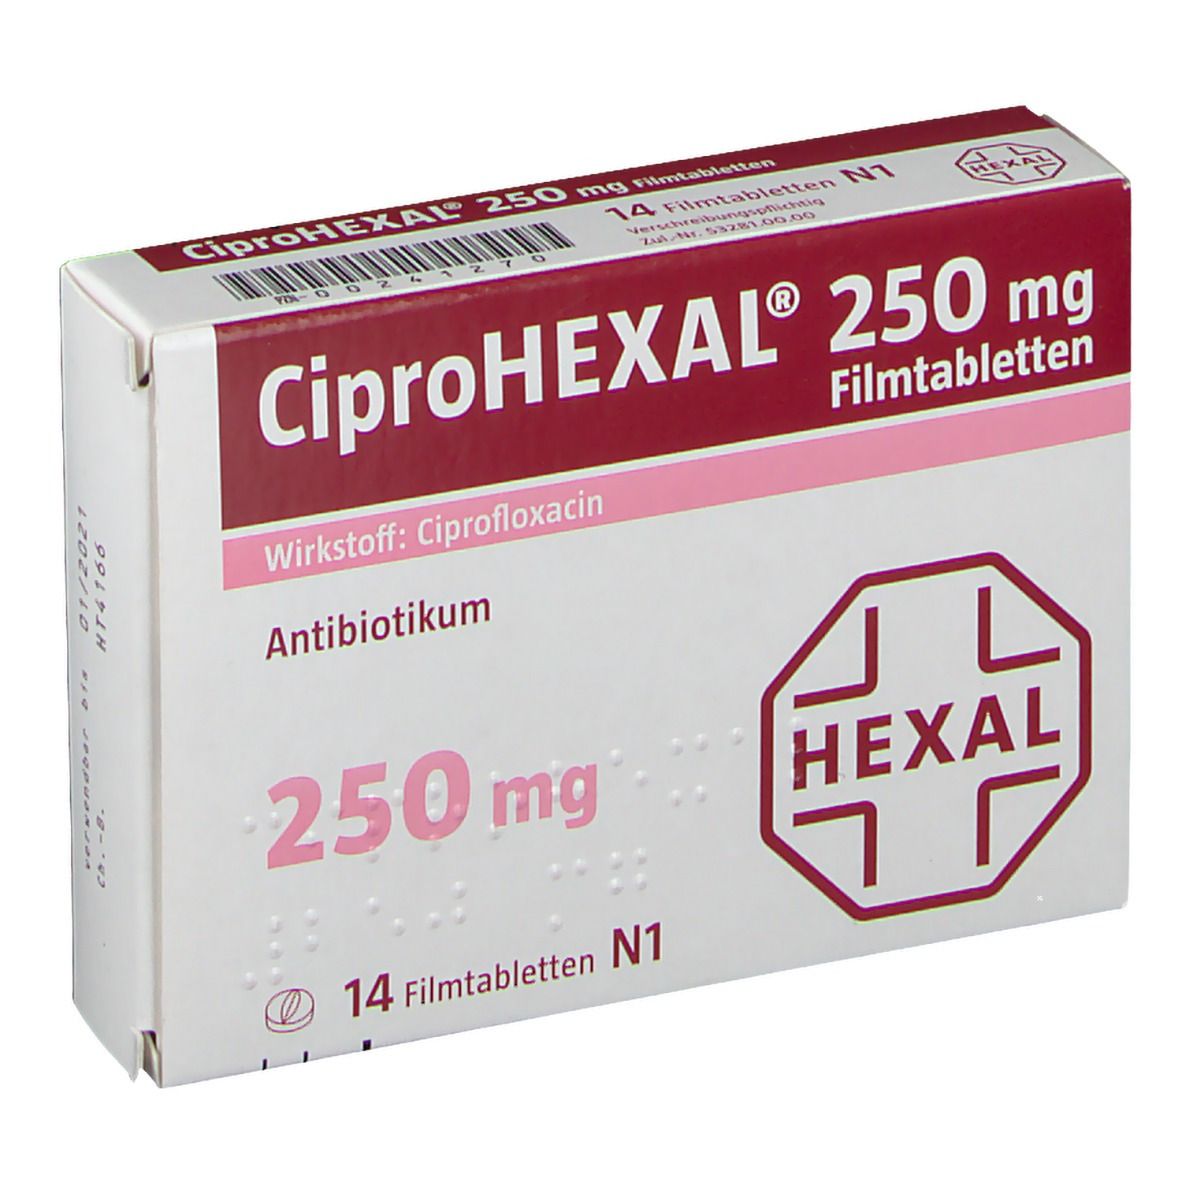 CiproHEXAL® 250 mg